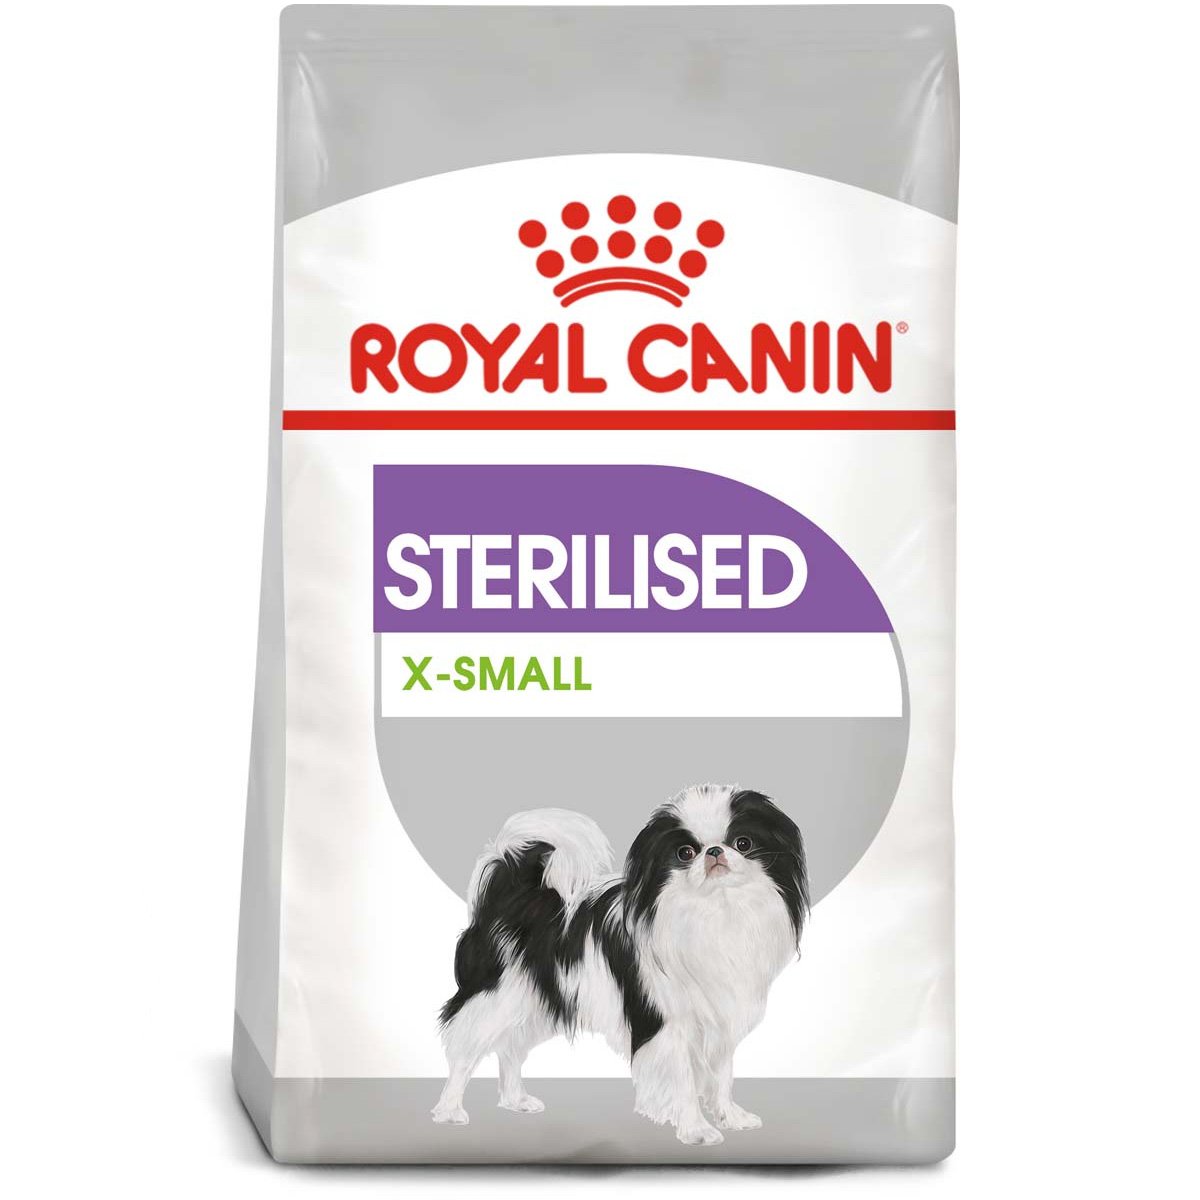 ROYAL CANIN STERILISED X-SMALL Trockenfutter für kastrierte sehr kleine Hunde 1,5kg von Royal Canin